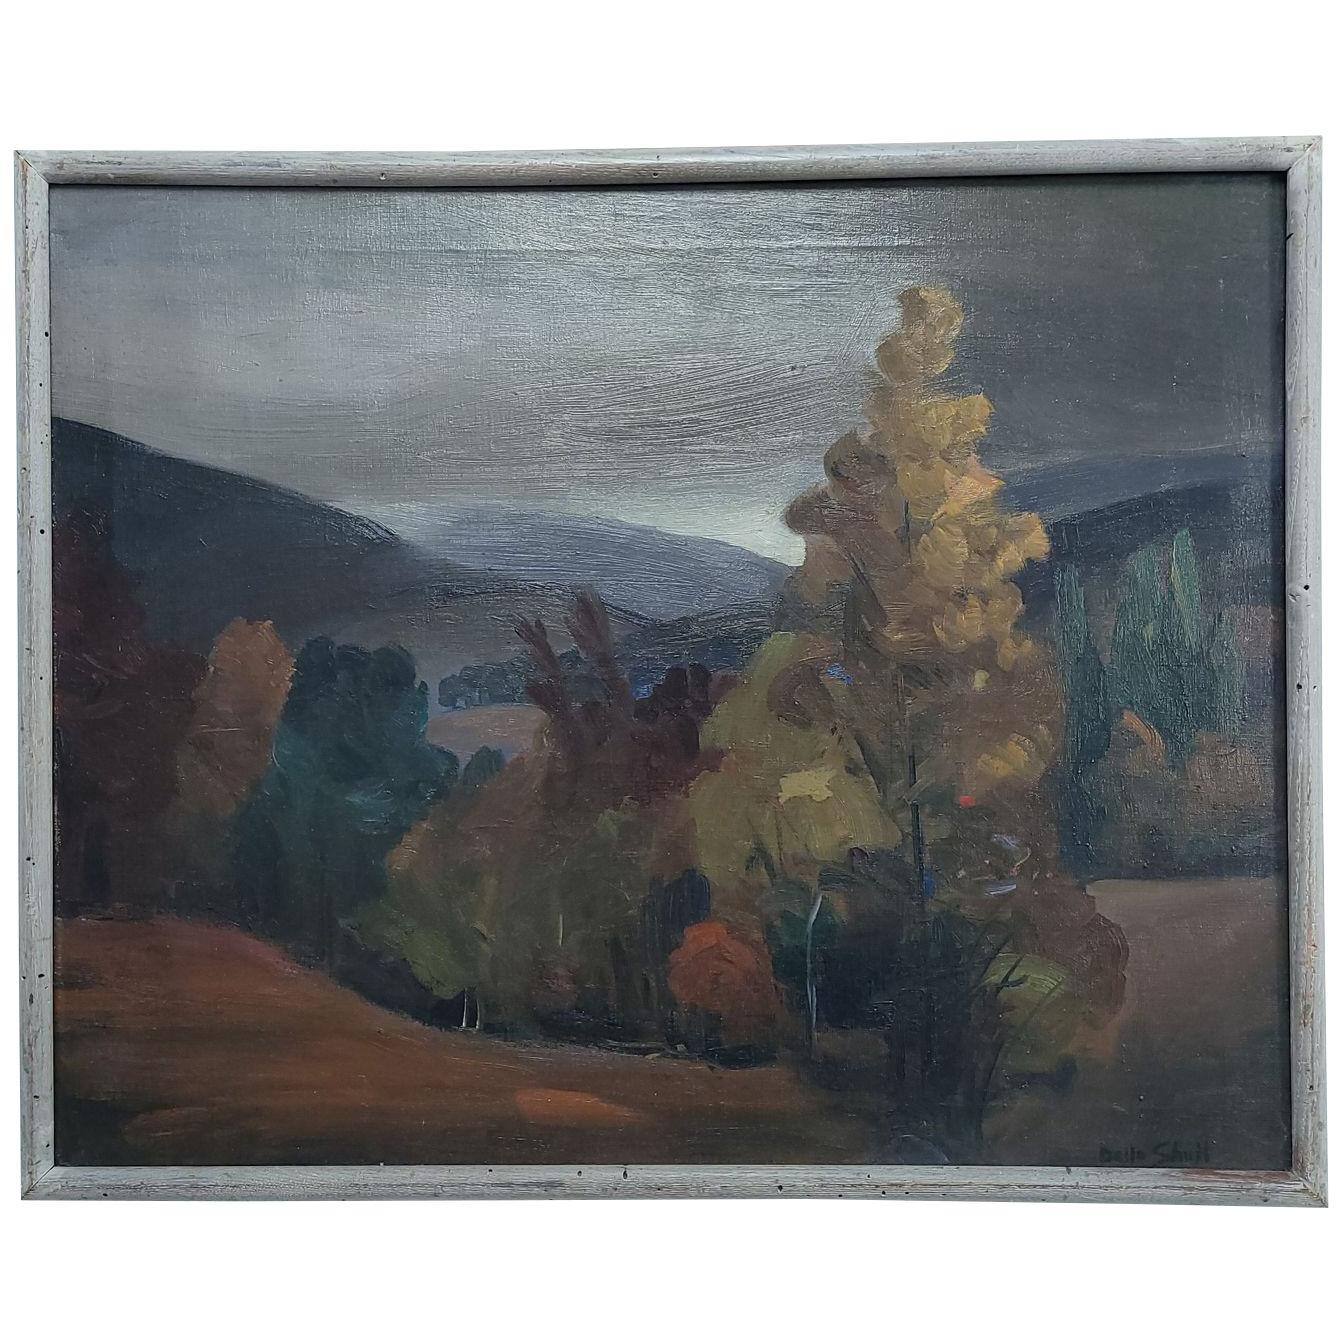 "Gray Day" by Della Shull (1878–1961)